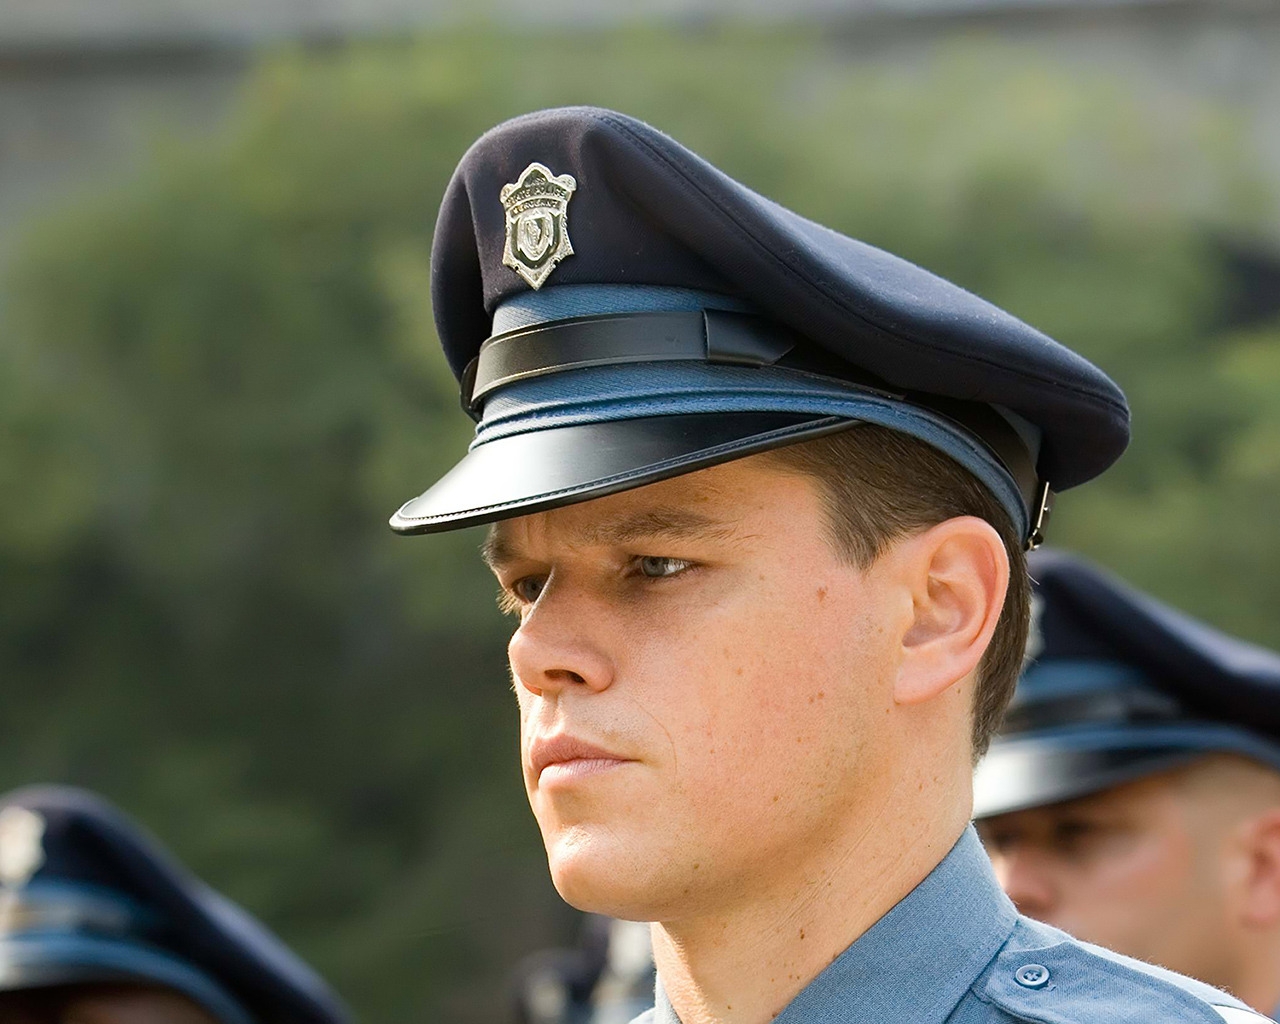 Matt Damon Cop for 1280 x 1024 resolution